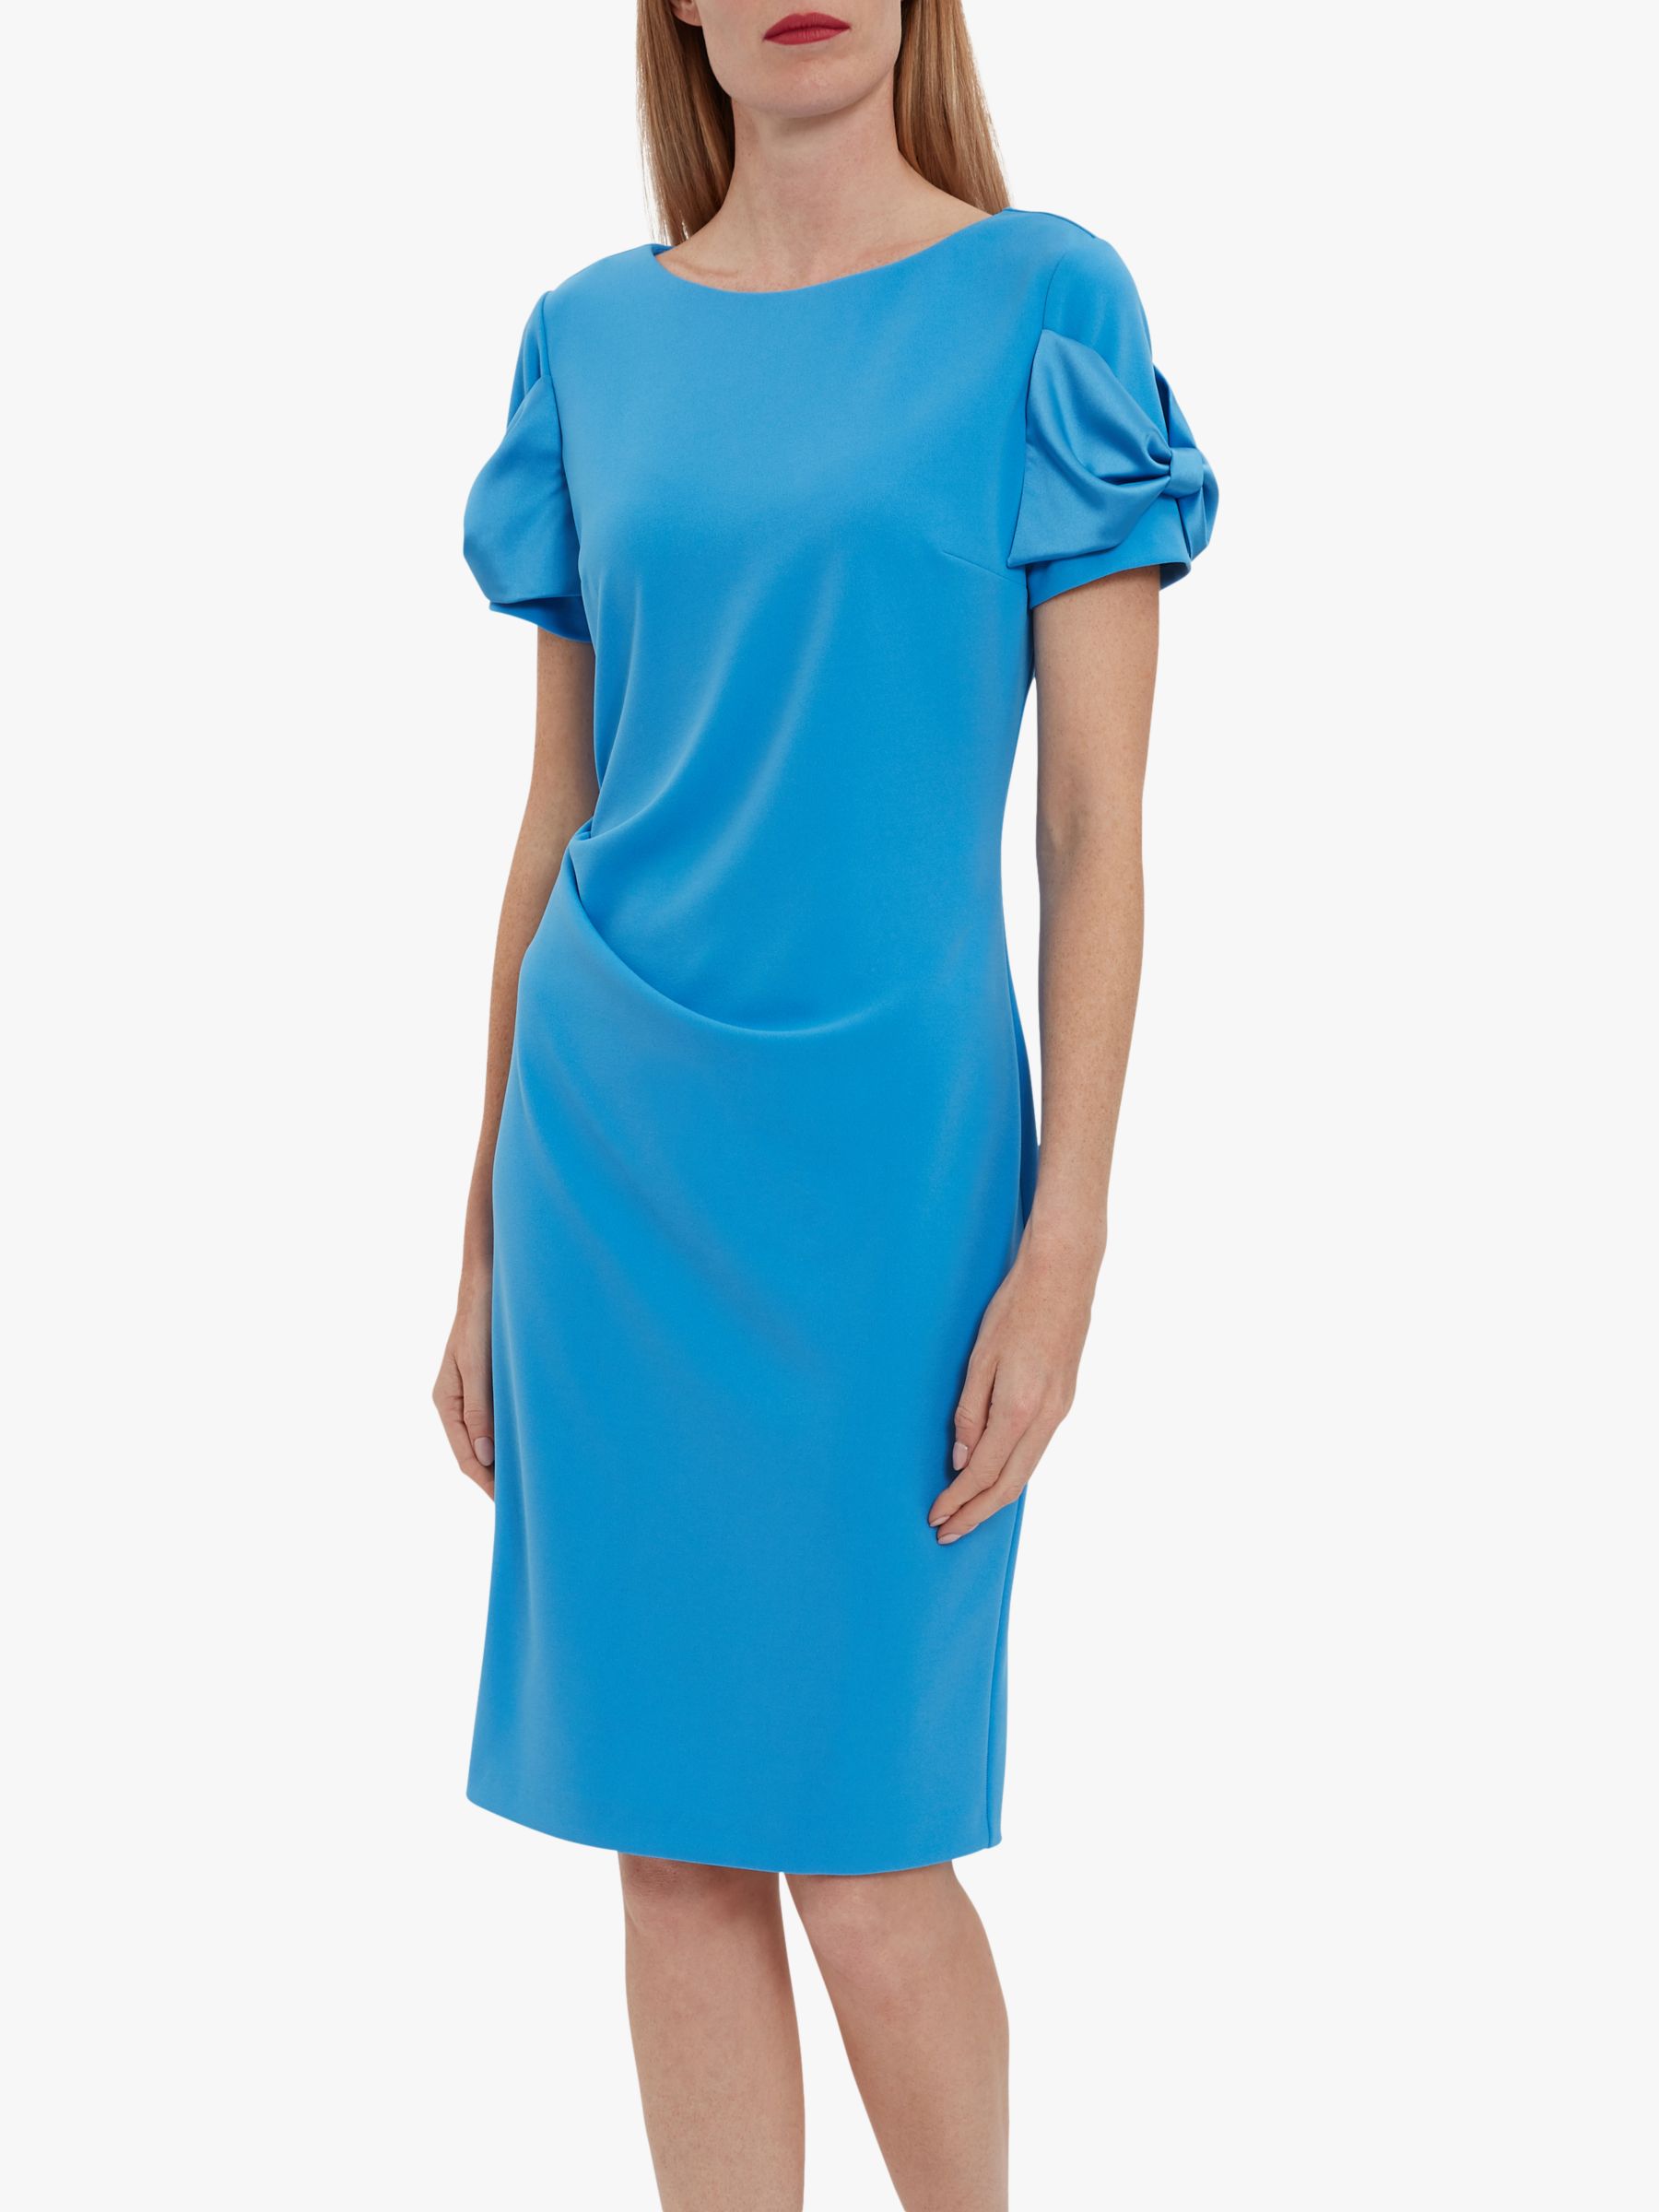 Gina Bacconi Lorene Crepe Satin Bow Dress, Lapis Blue, 20